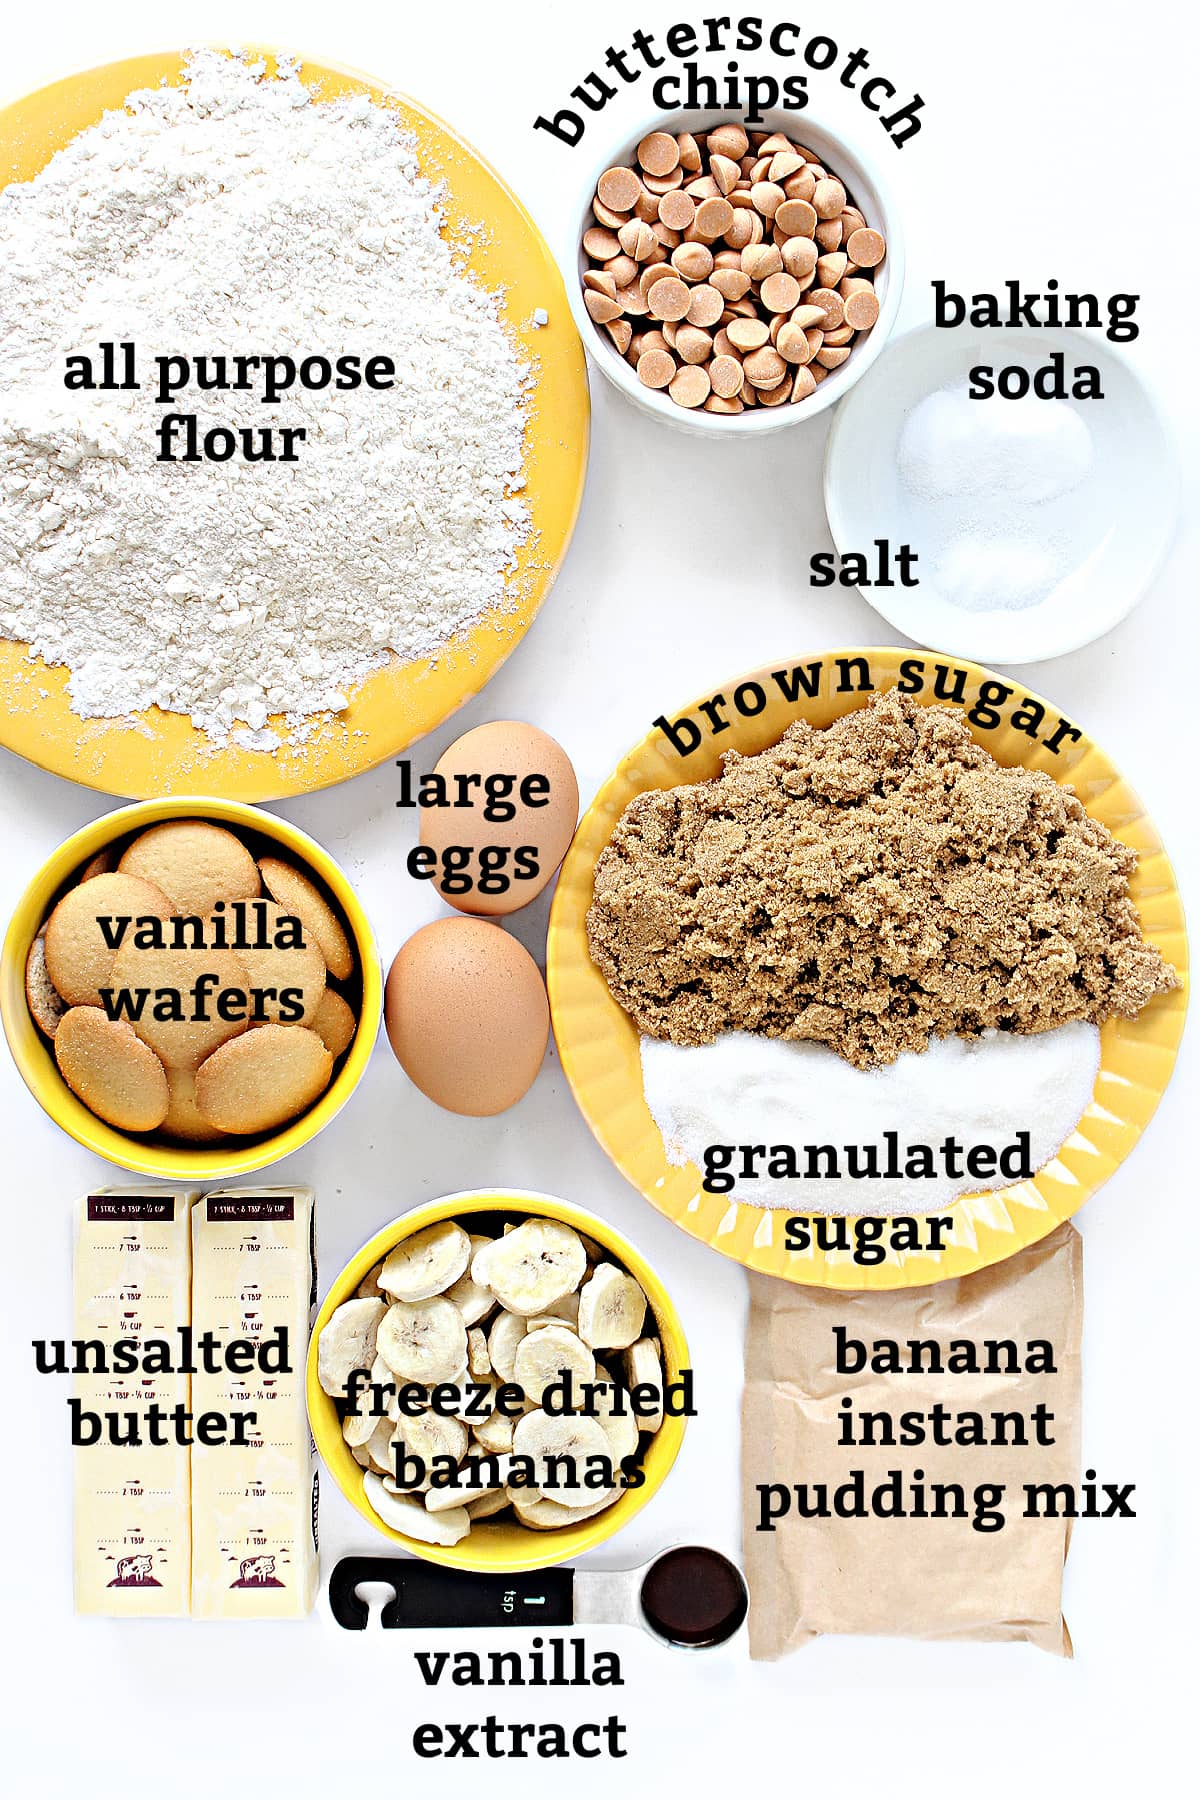 Ingredients: flour, butterscotch chips, baking soda, salt, eggs, vanilla wafers, sugar, butter, instant pudding, dried bananas, vanilla.